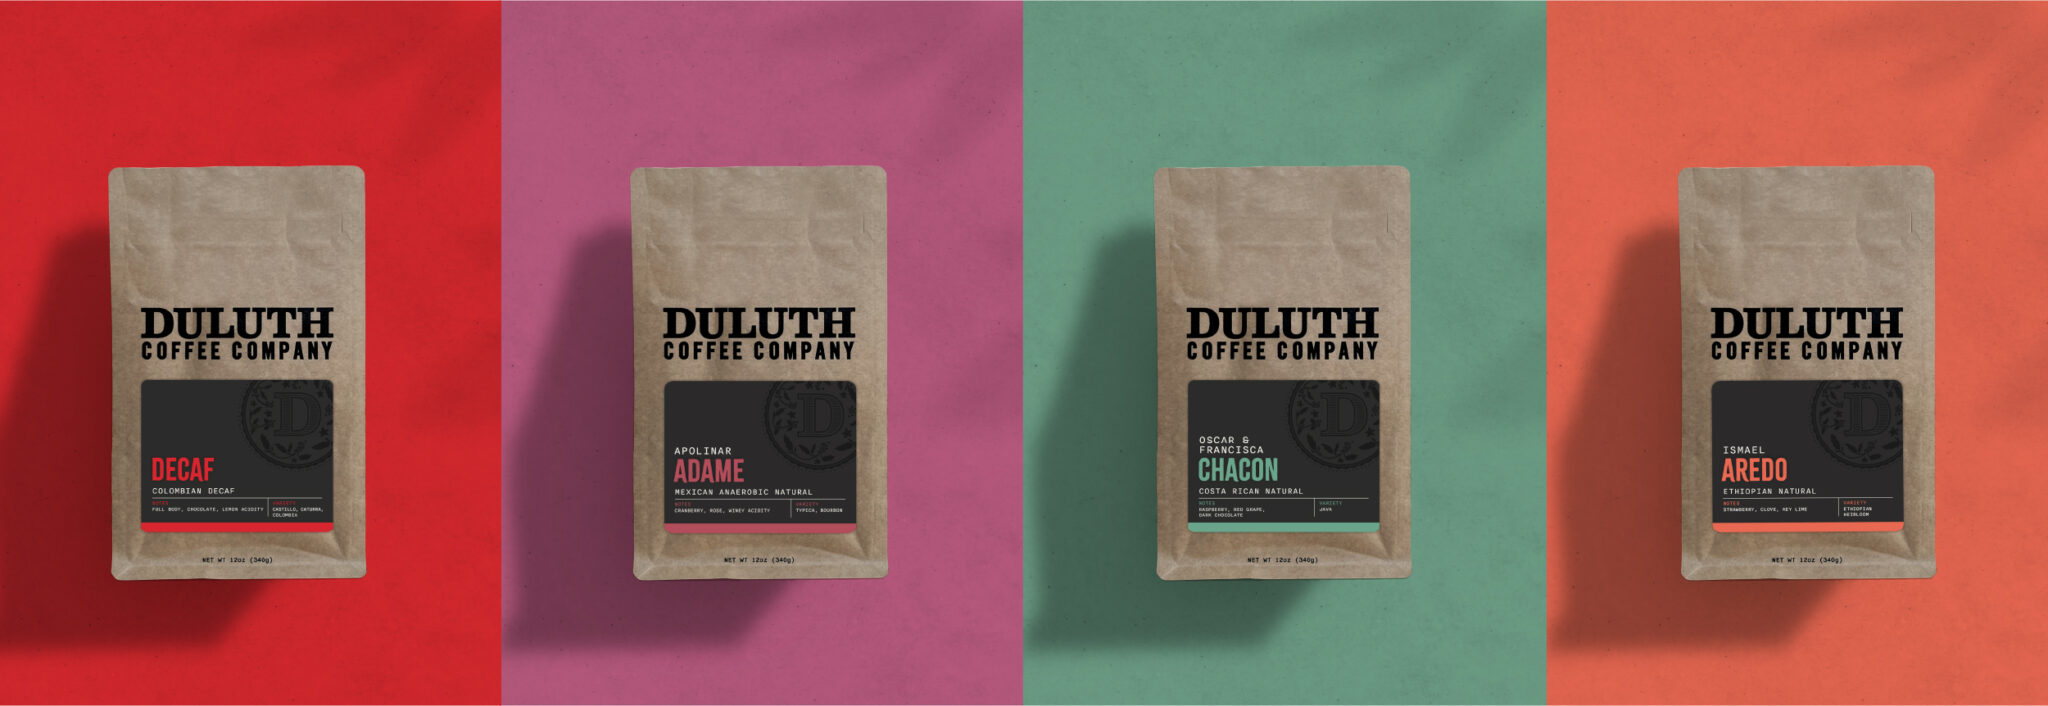 Duluth Coffee Company coffee package design, created by Šek Design Studio